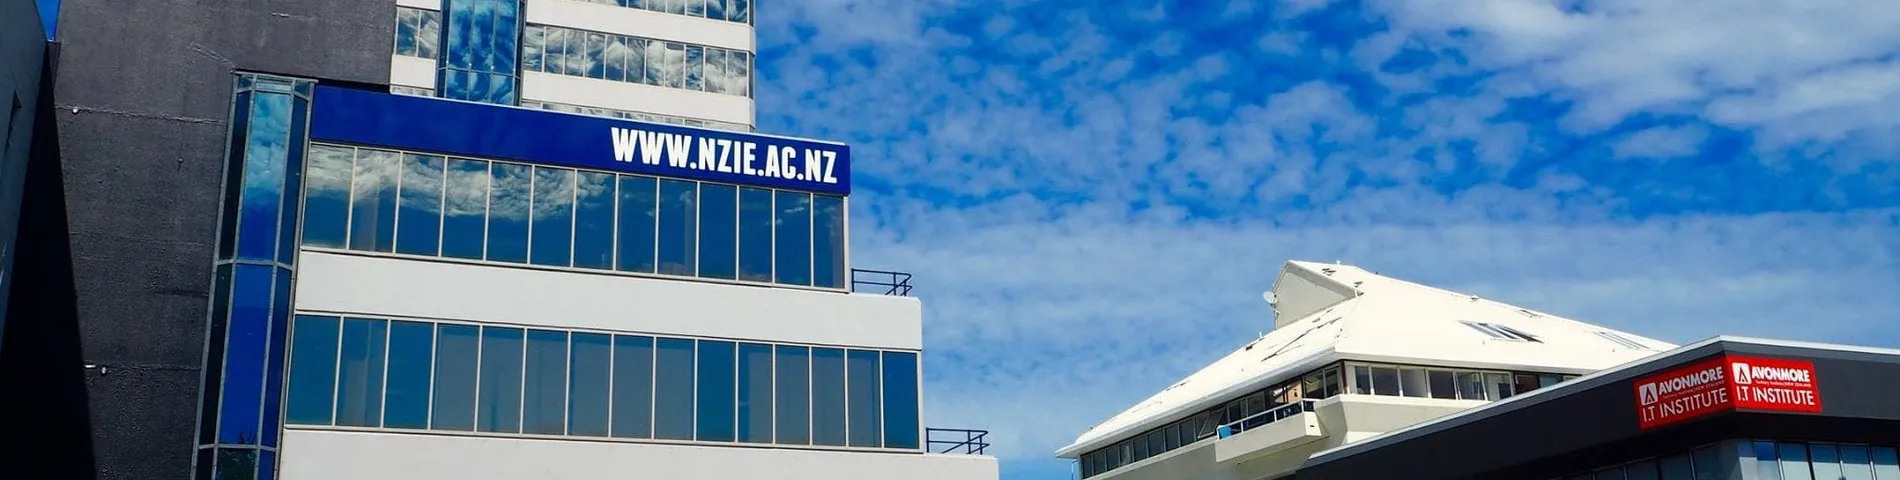 NZIE - New Zealand Institute of Education bilde 1